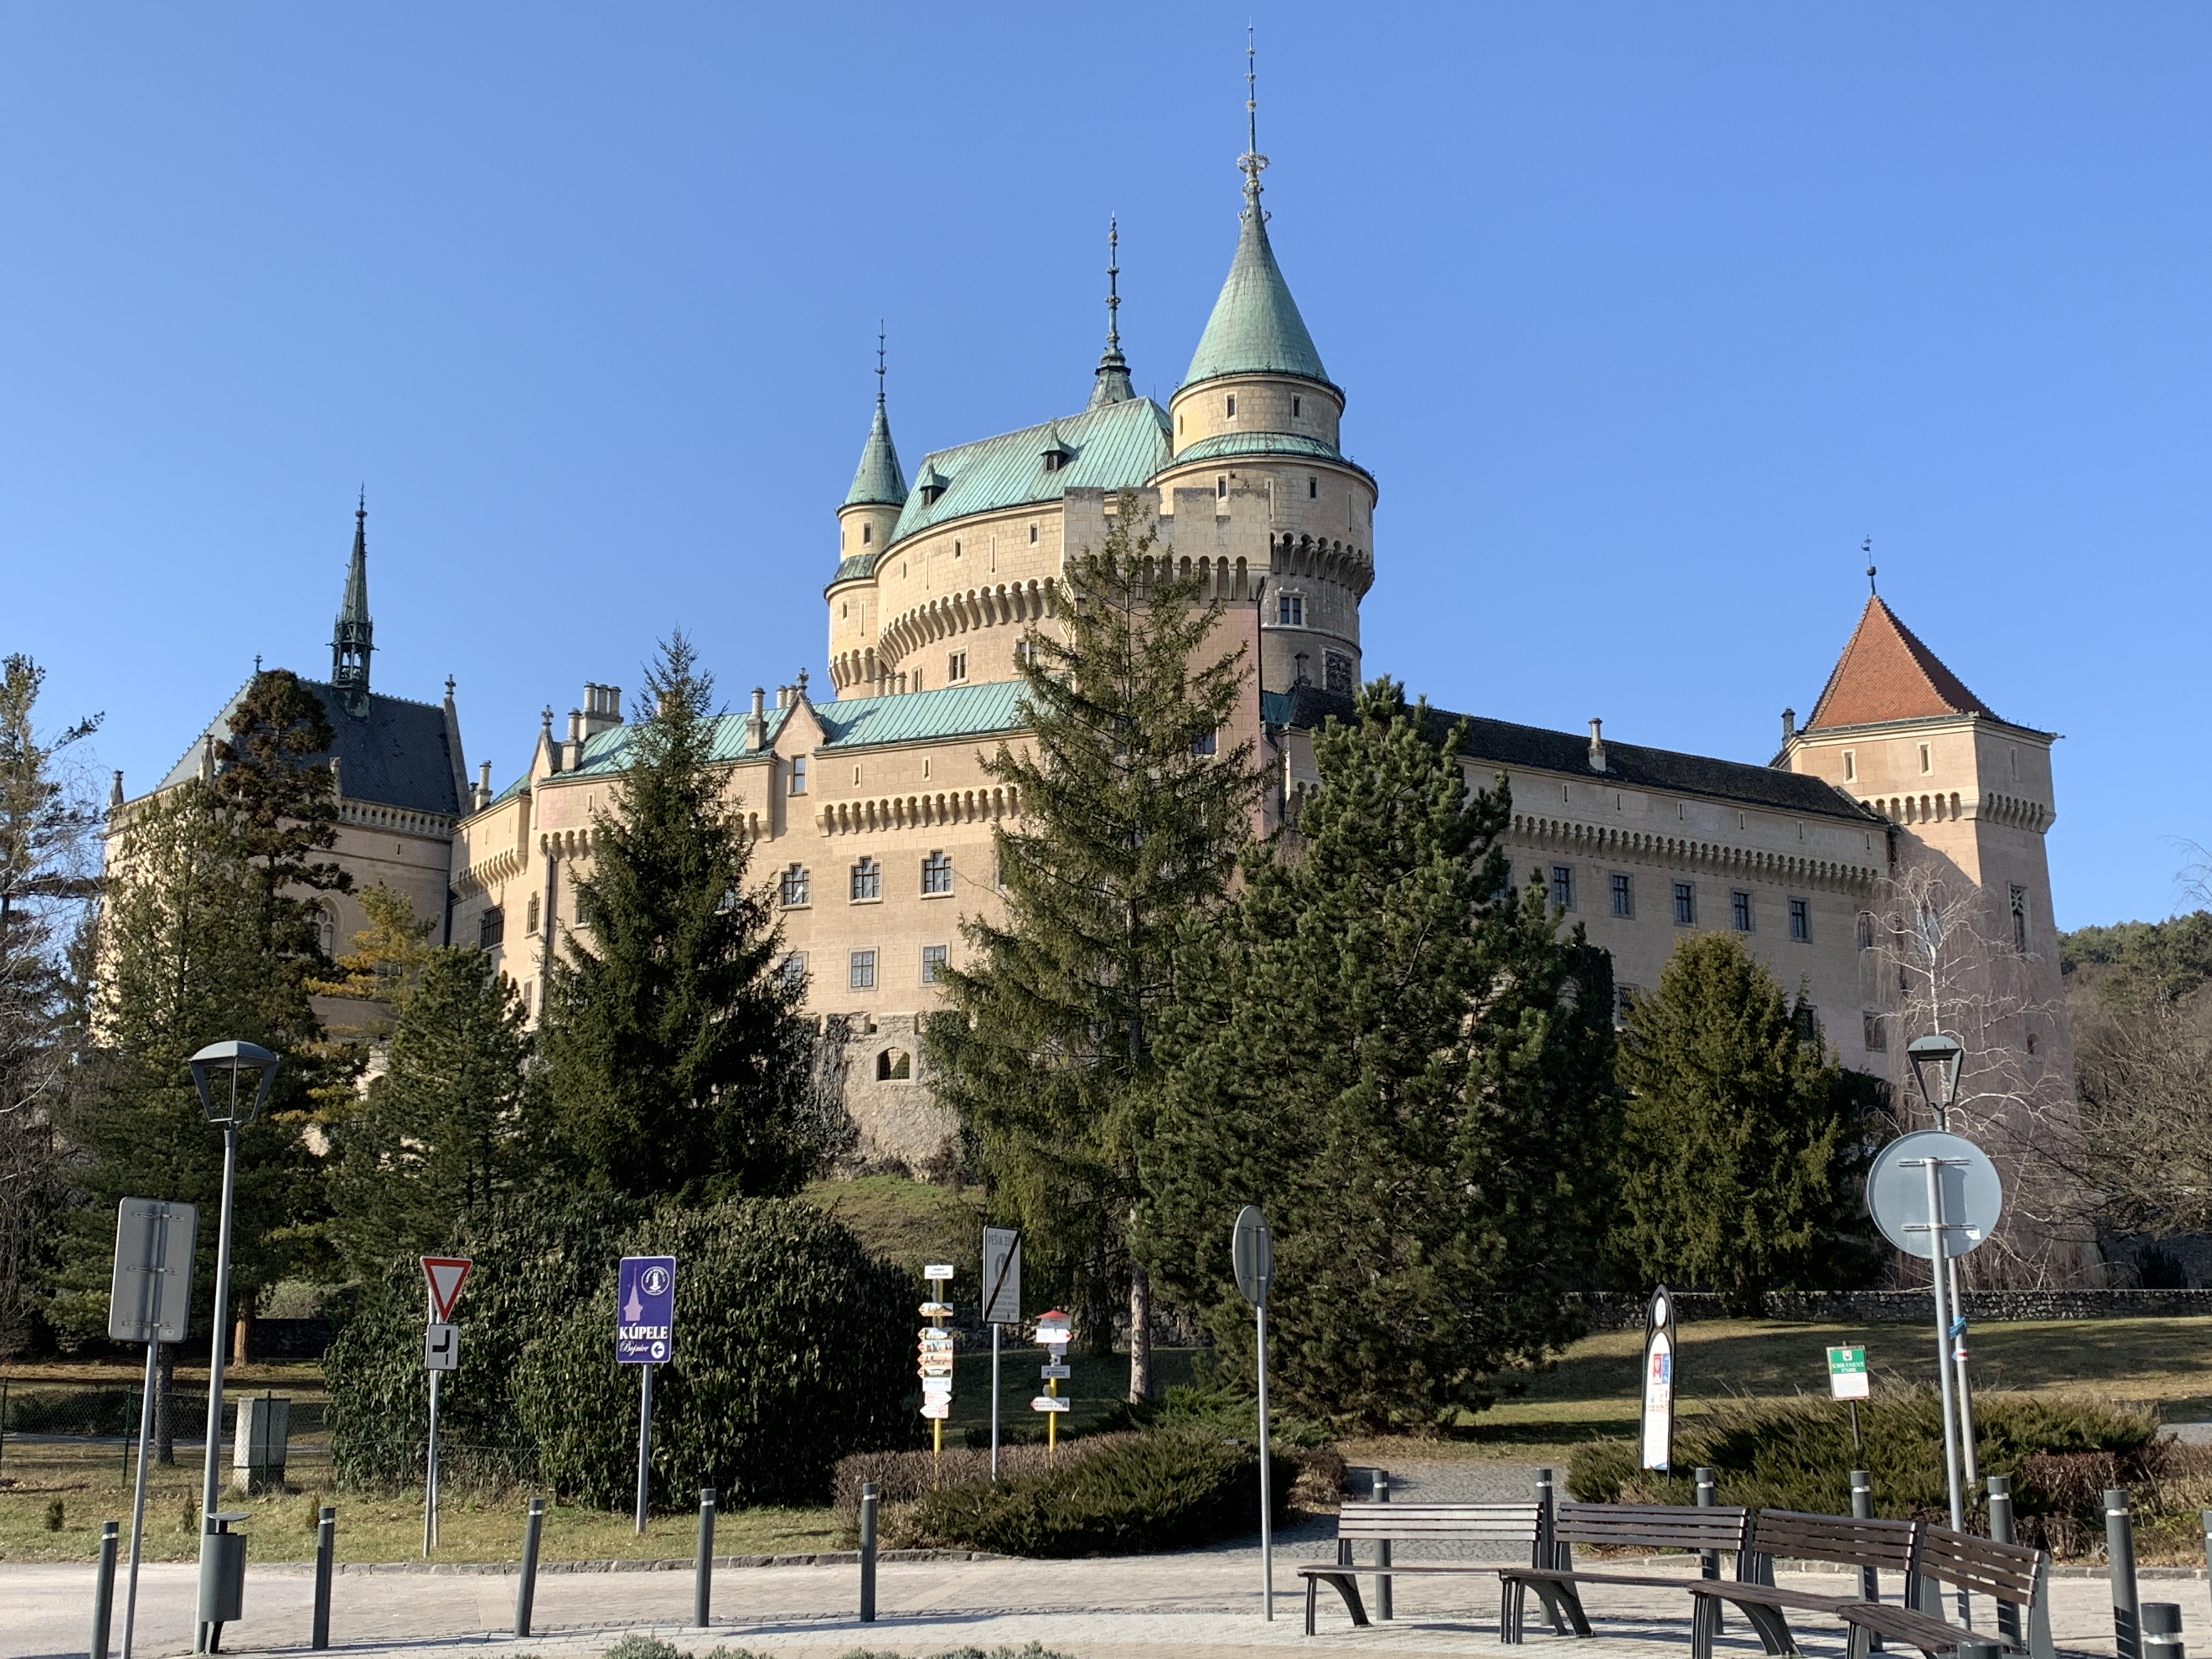 Free WiFi Bojnice city center